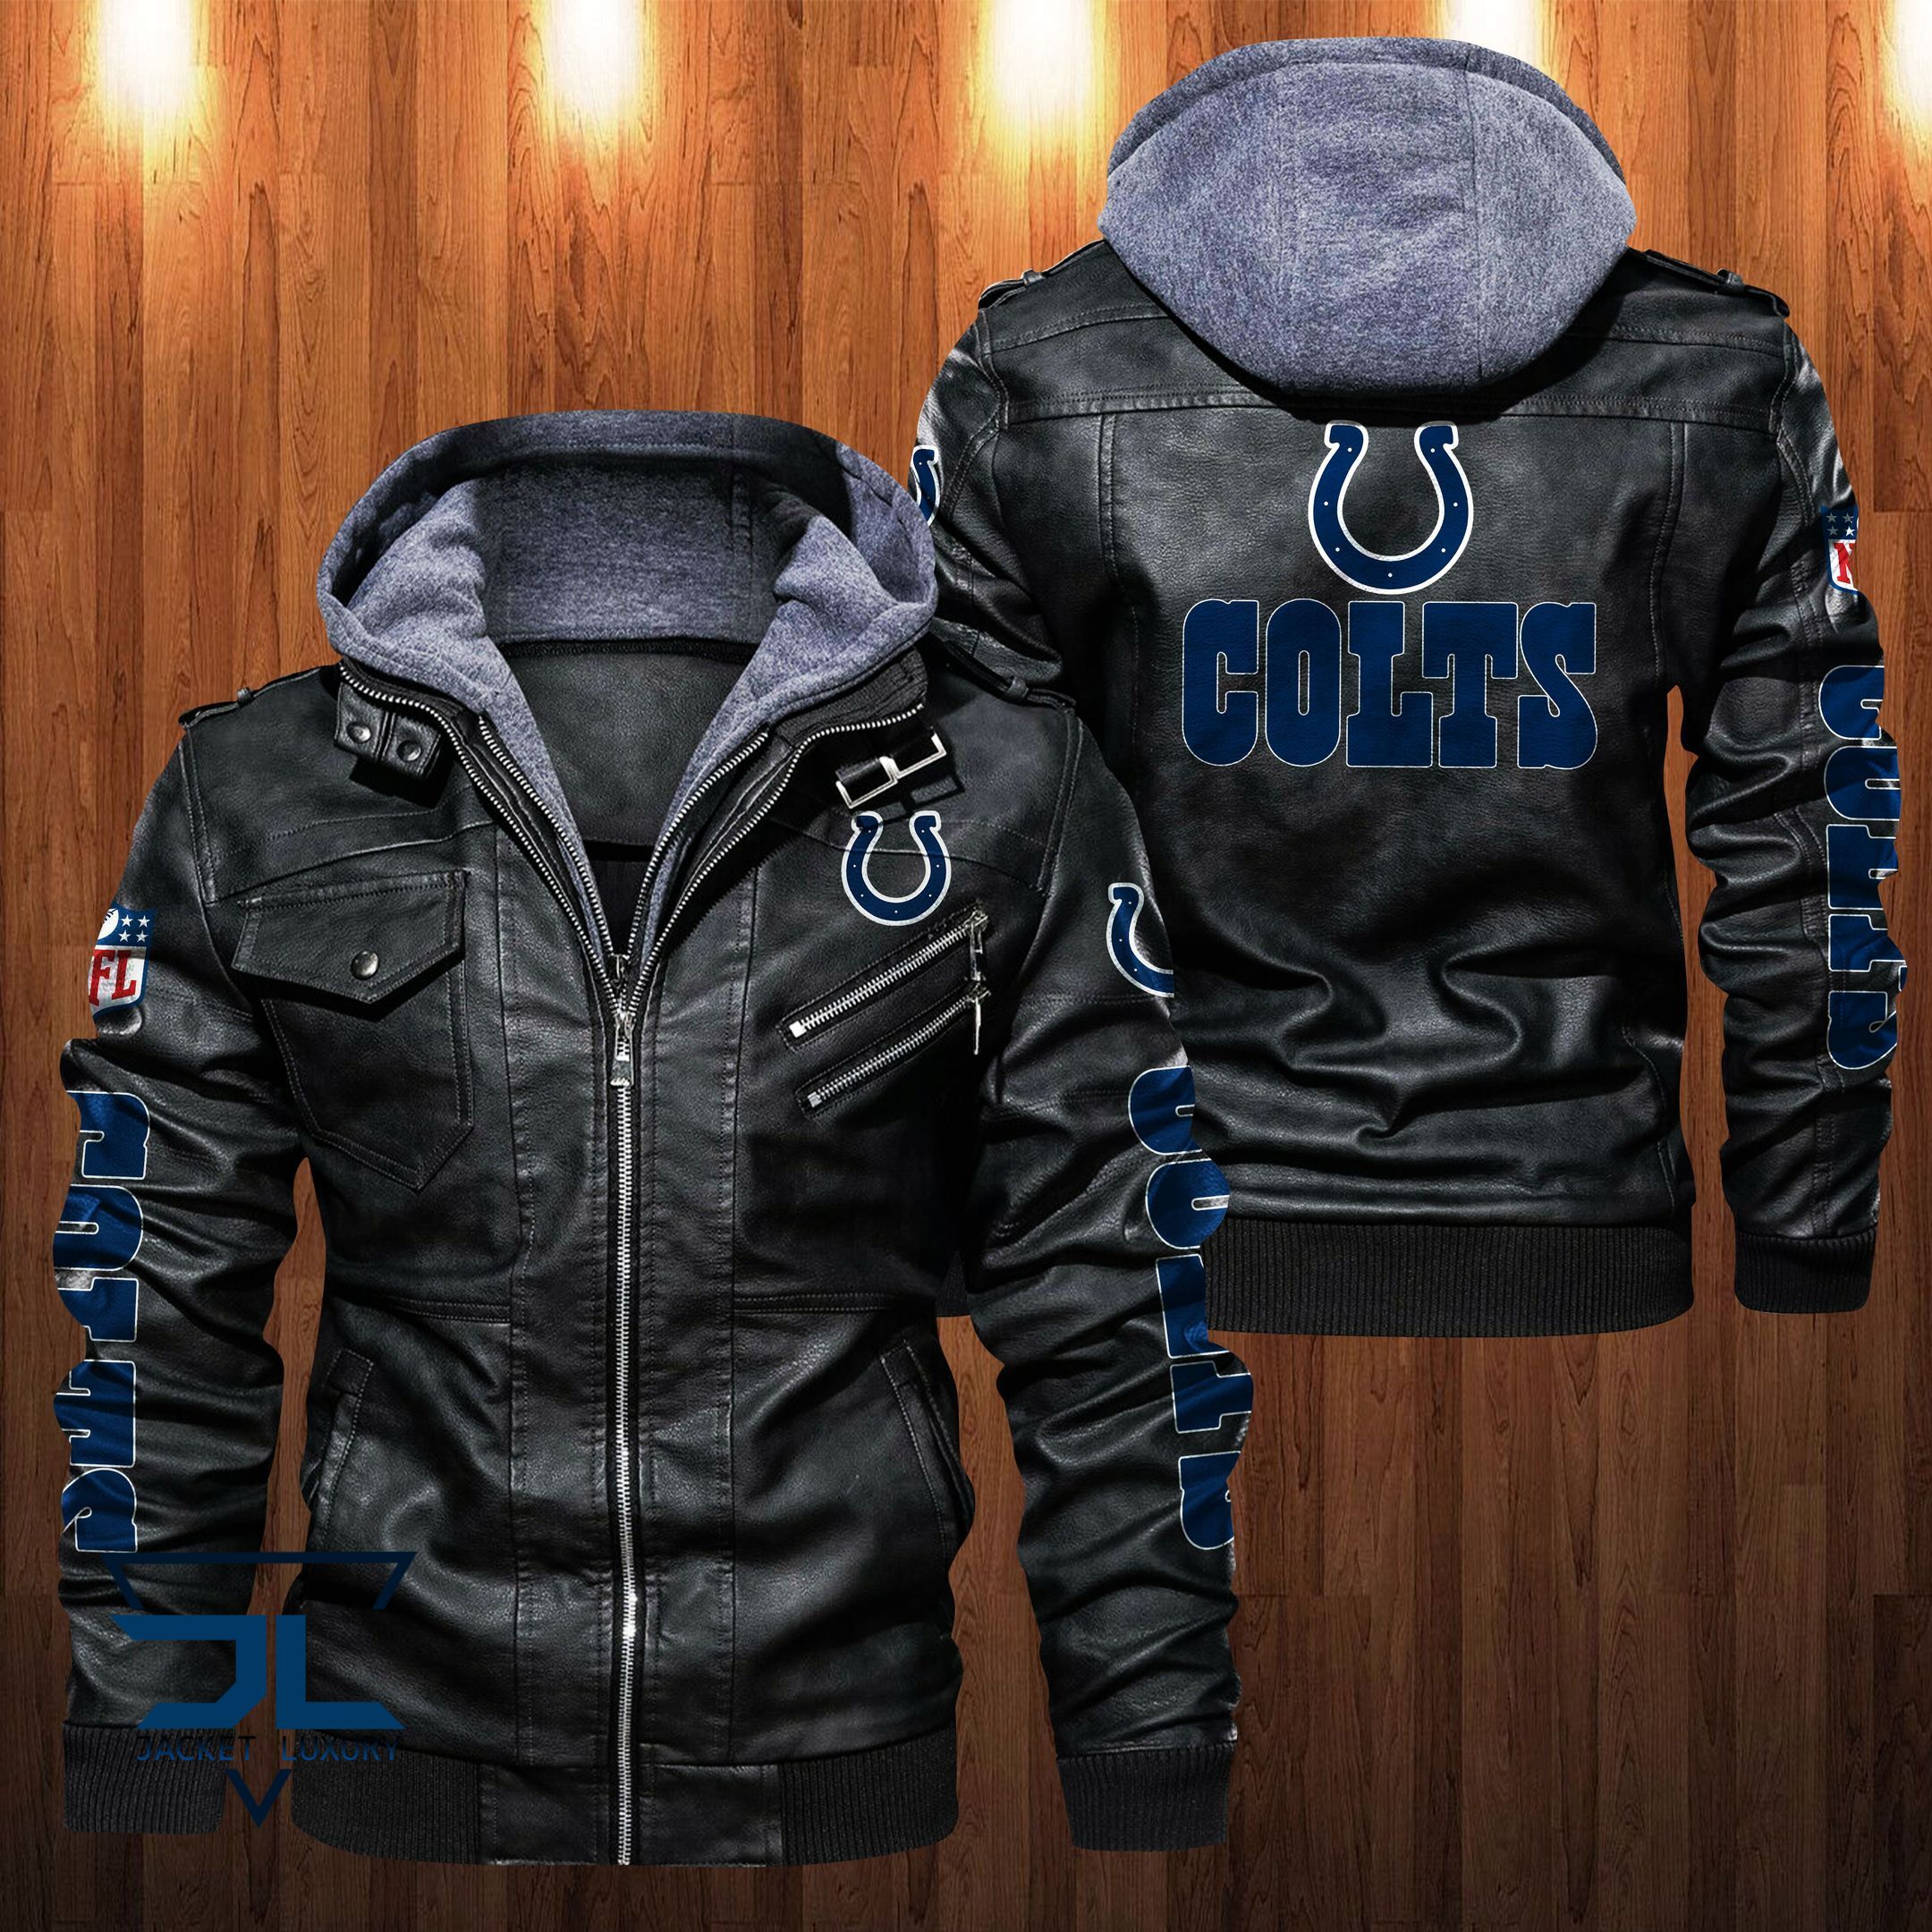 What Leather jacket Sells Best on Techcomshop? 105